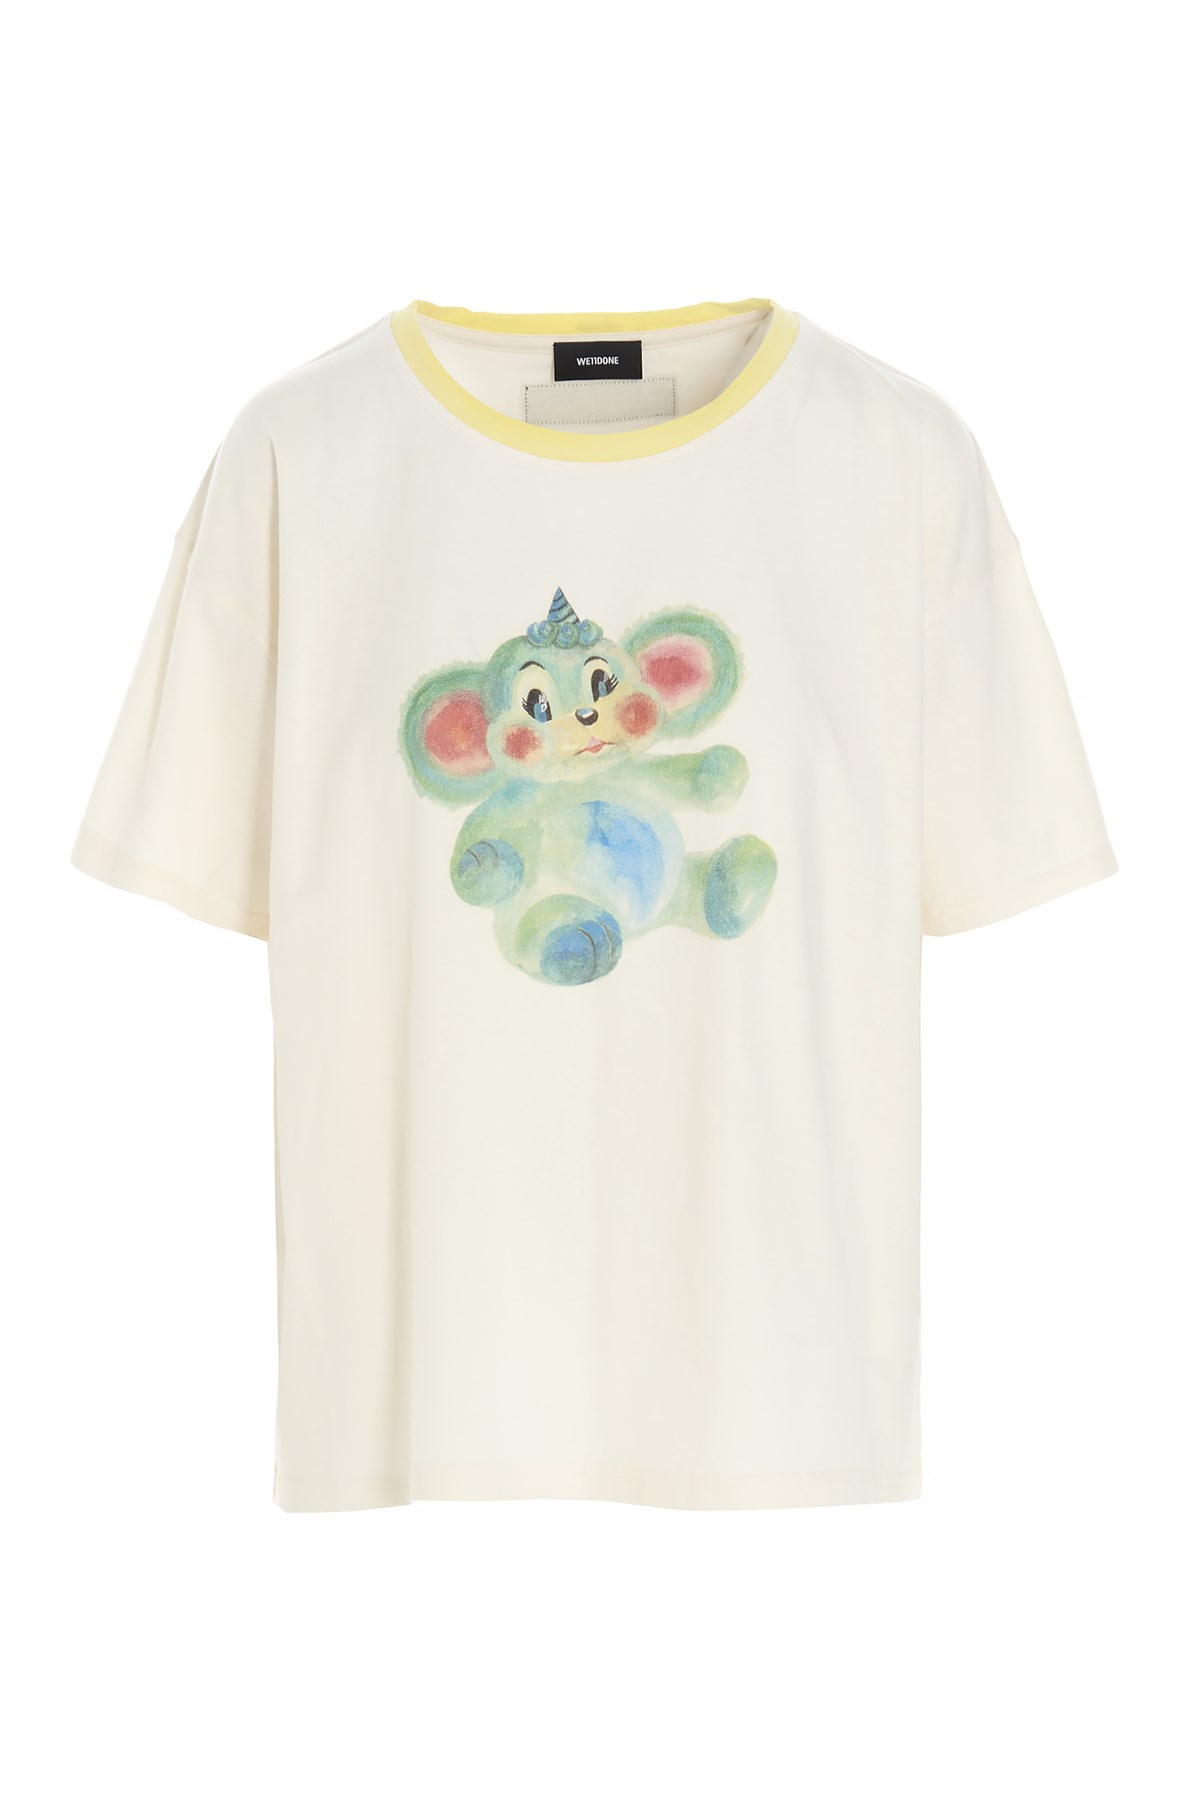 WE11DONE 'Yellow Monster’ T-Shirt